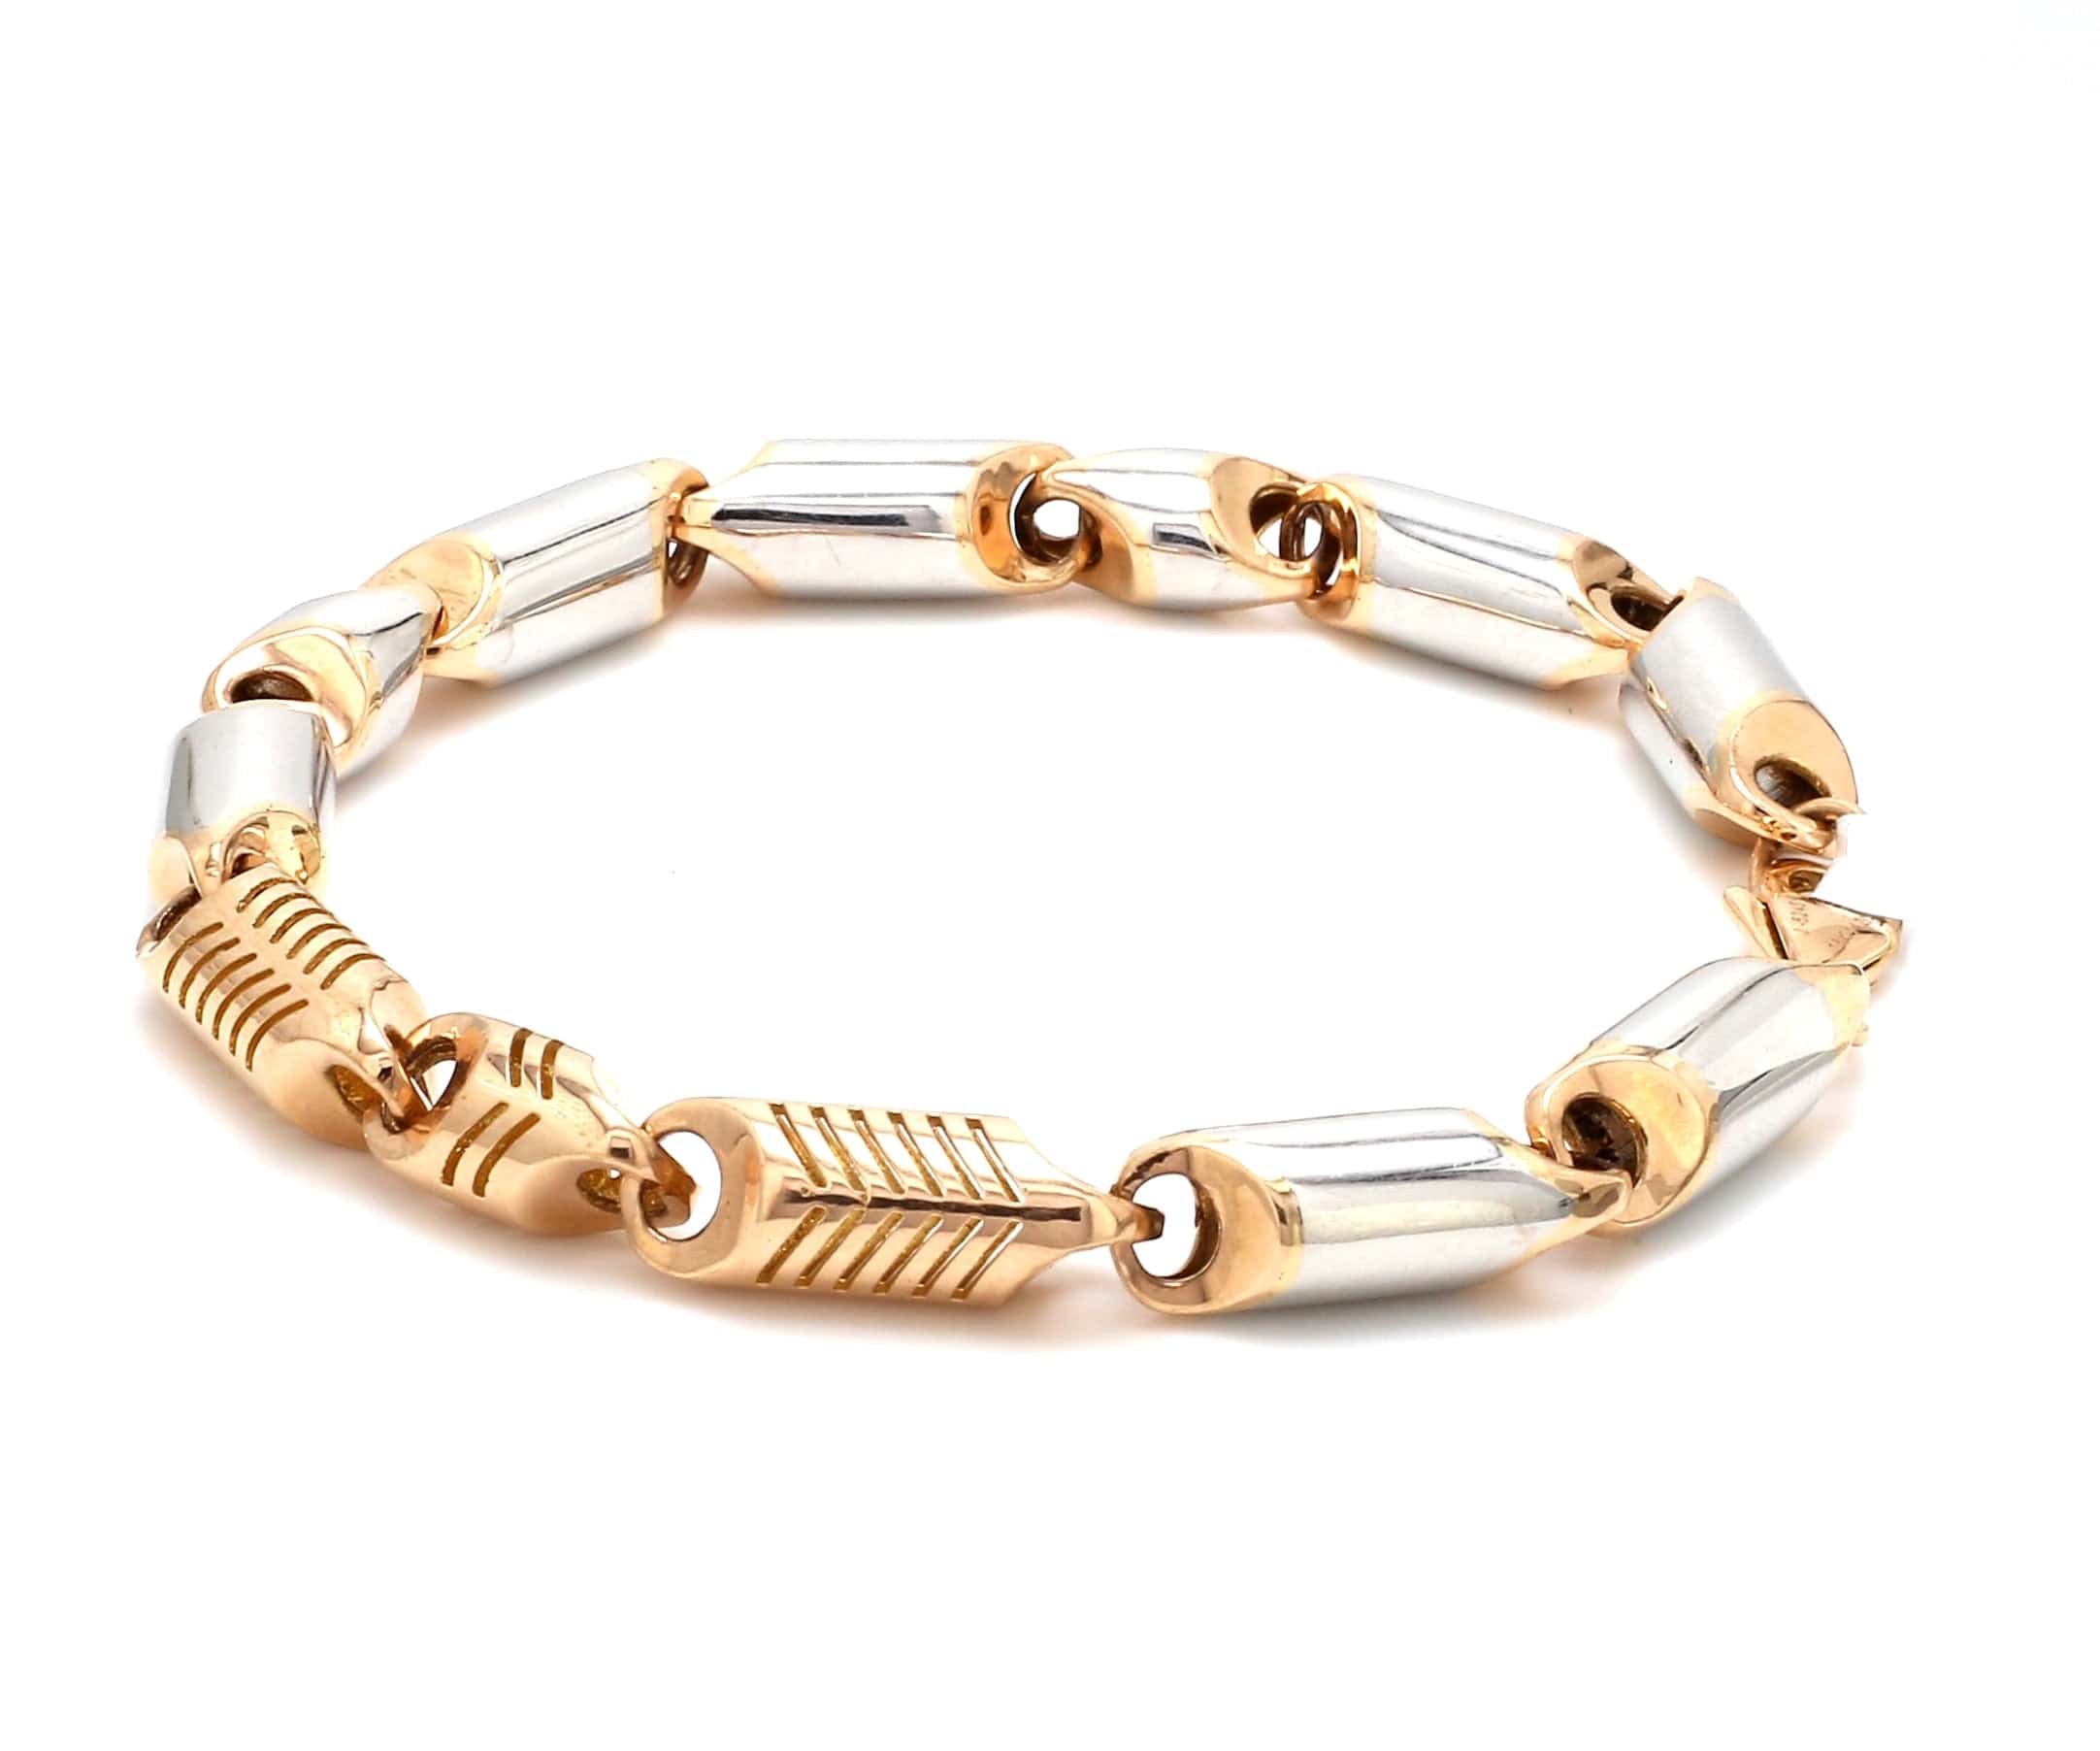 Unisex Men's Women's Steel Fashion Love Bolts and Screws Bracelet Yellow  Gold | eBay